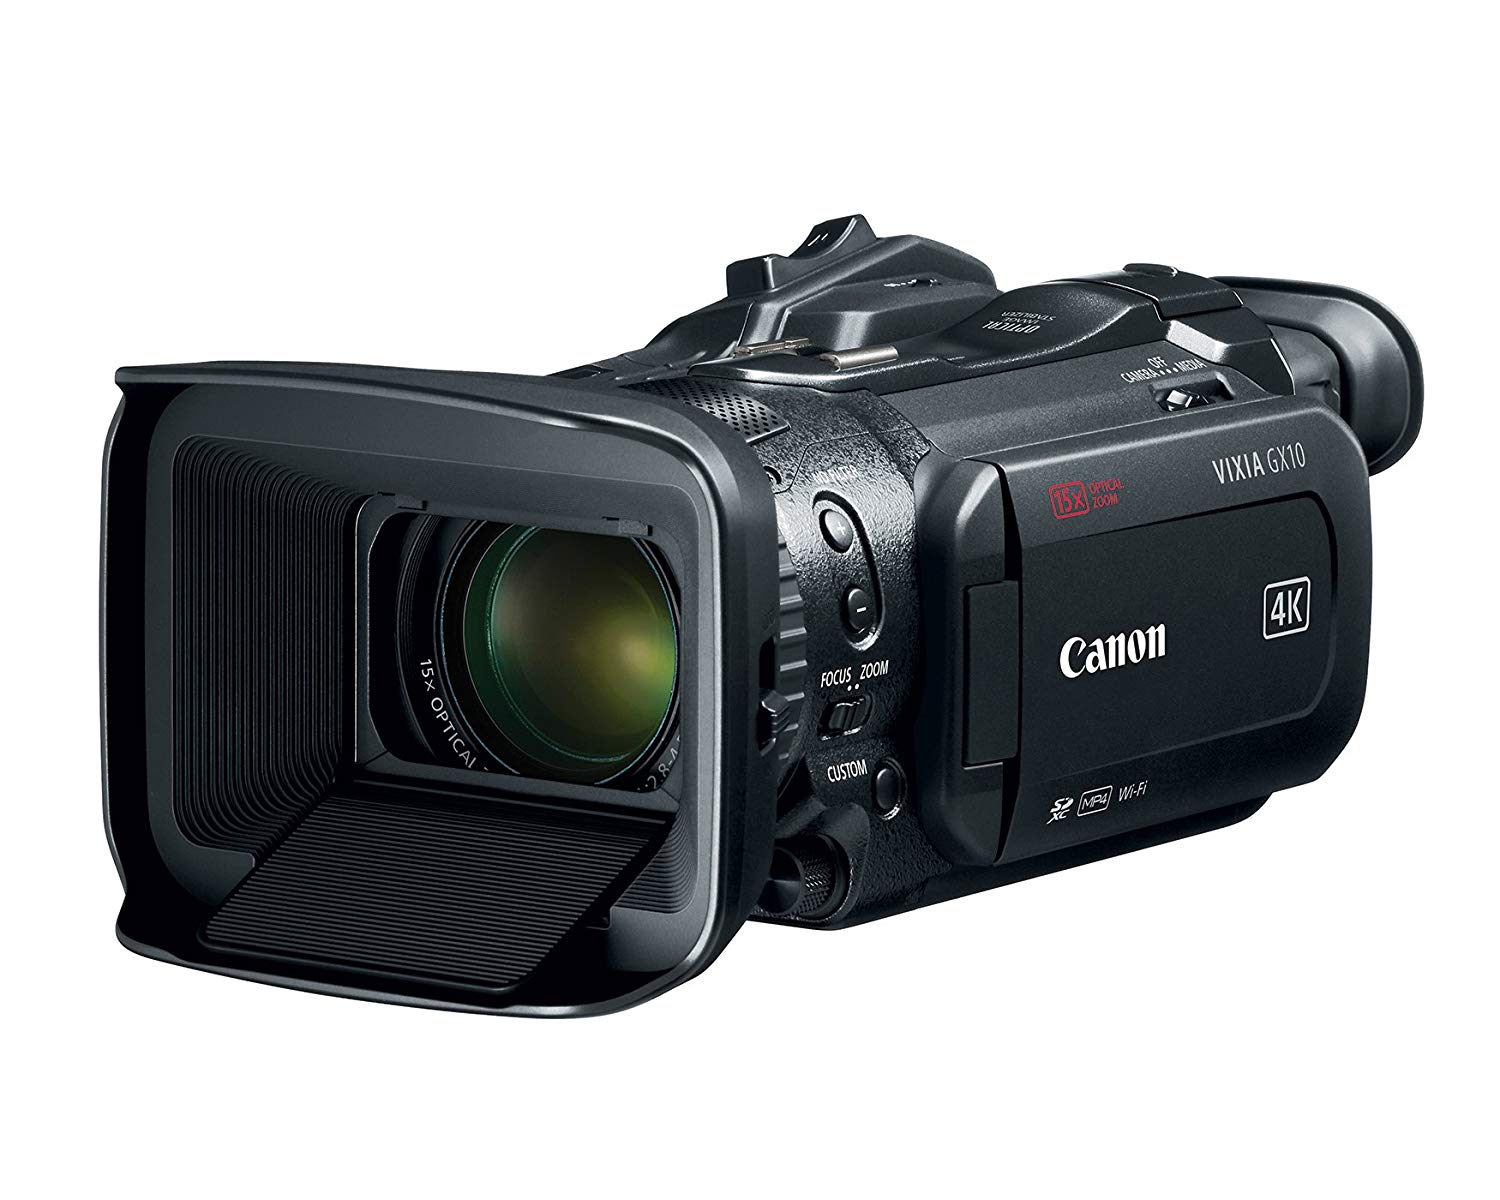 Canon Цифровая видеокамера  Vixia GX10 с Wi-Fi 4K Ultra HD с поддержкой Wi-Fi